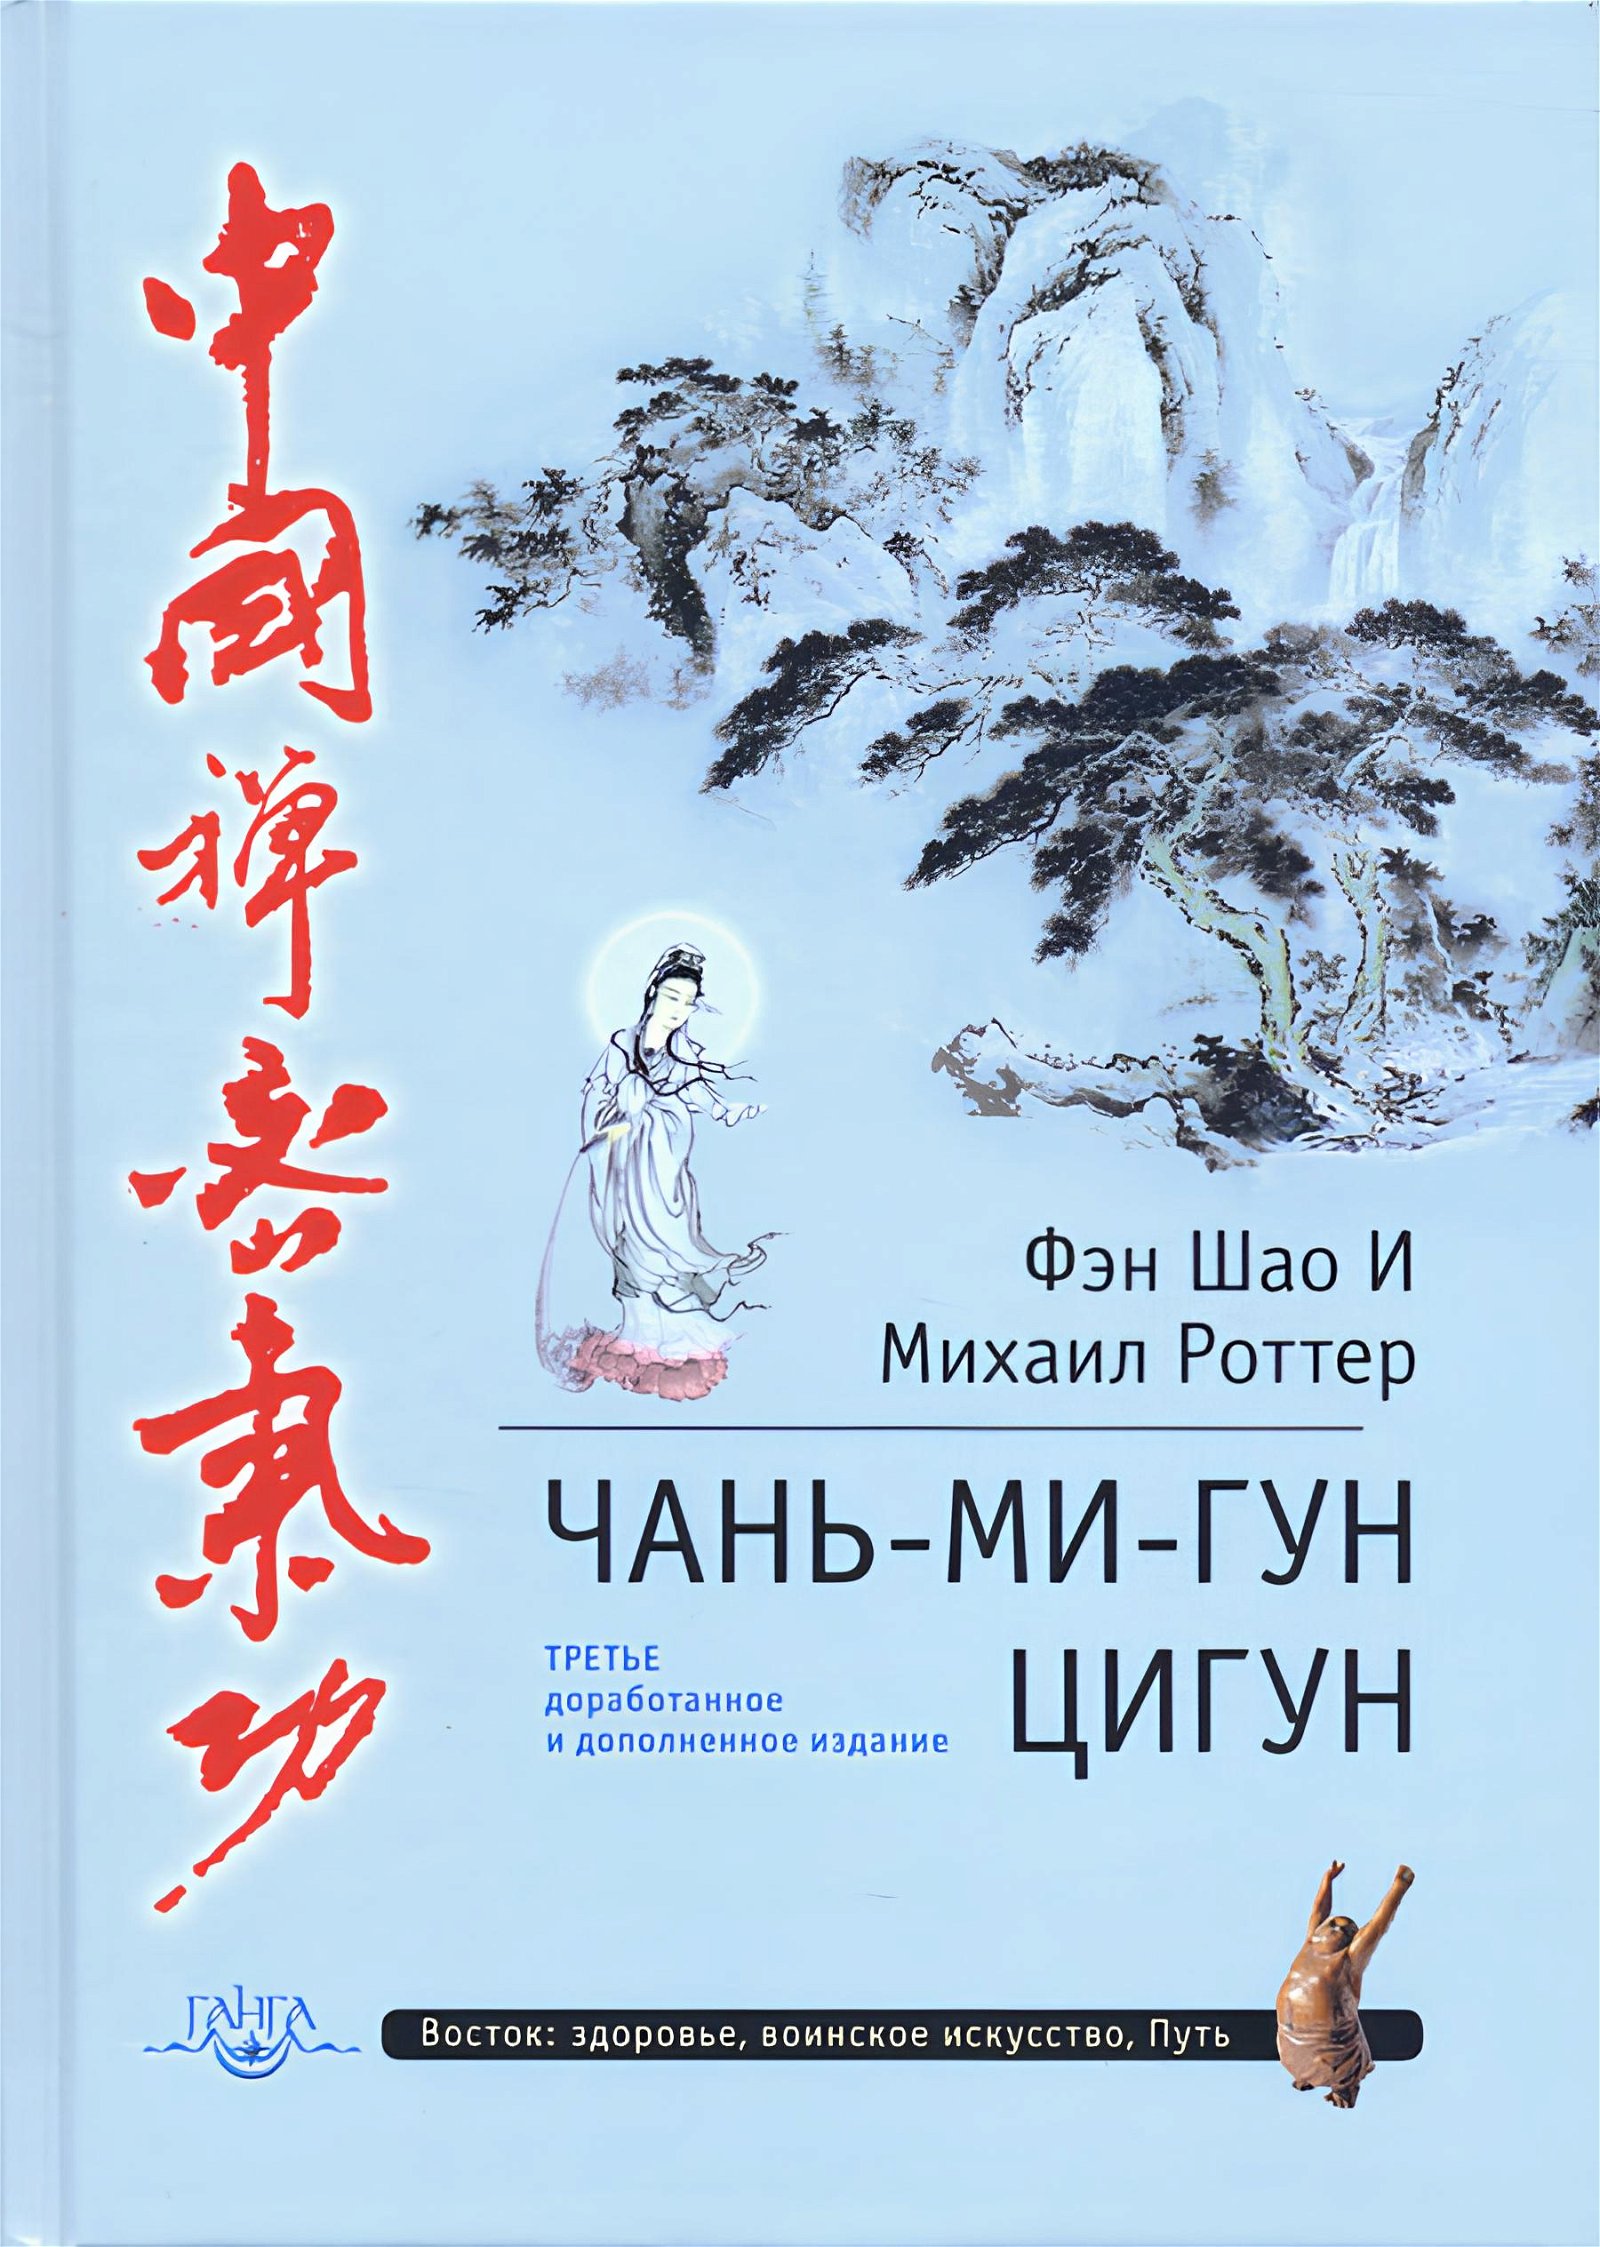 Купить книгу Чань-Ми-Гун Цигун Фэн Шао И, Роттер М. в интернет-магазине Ариаварта